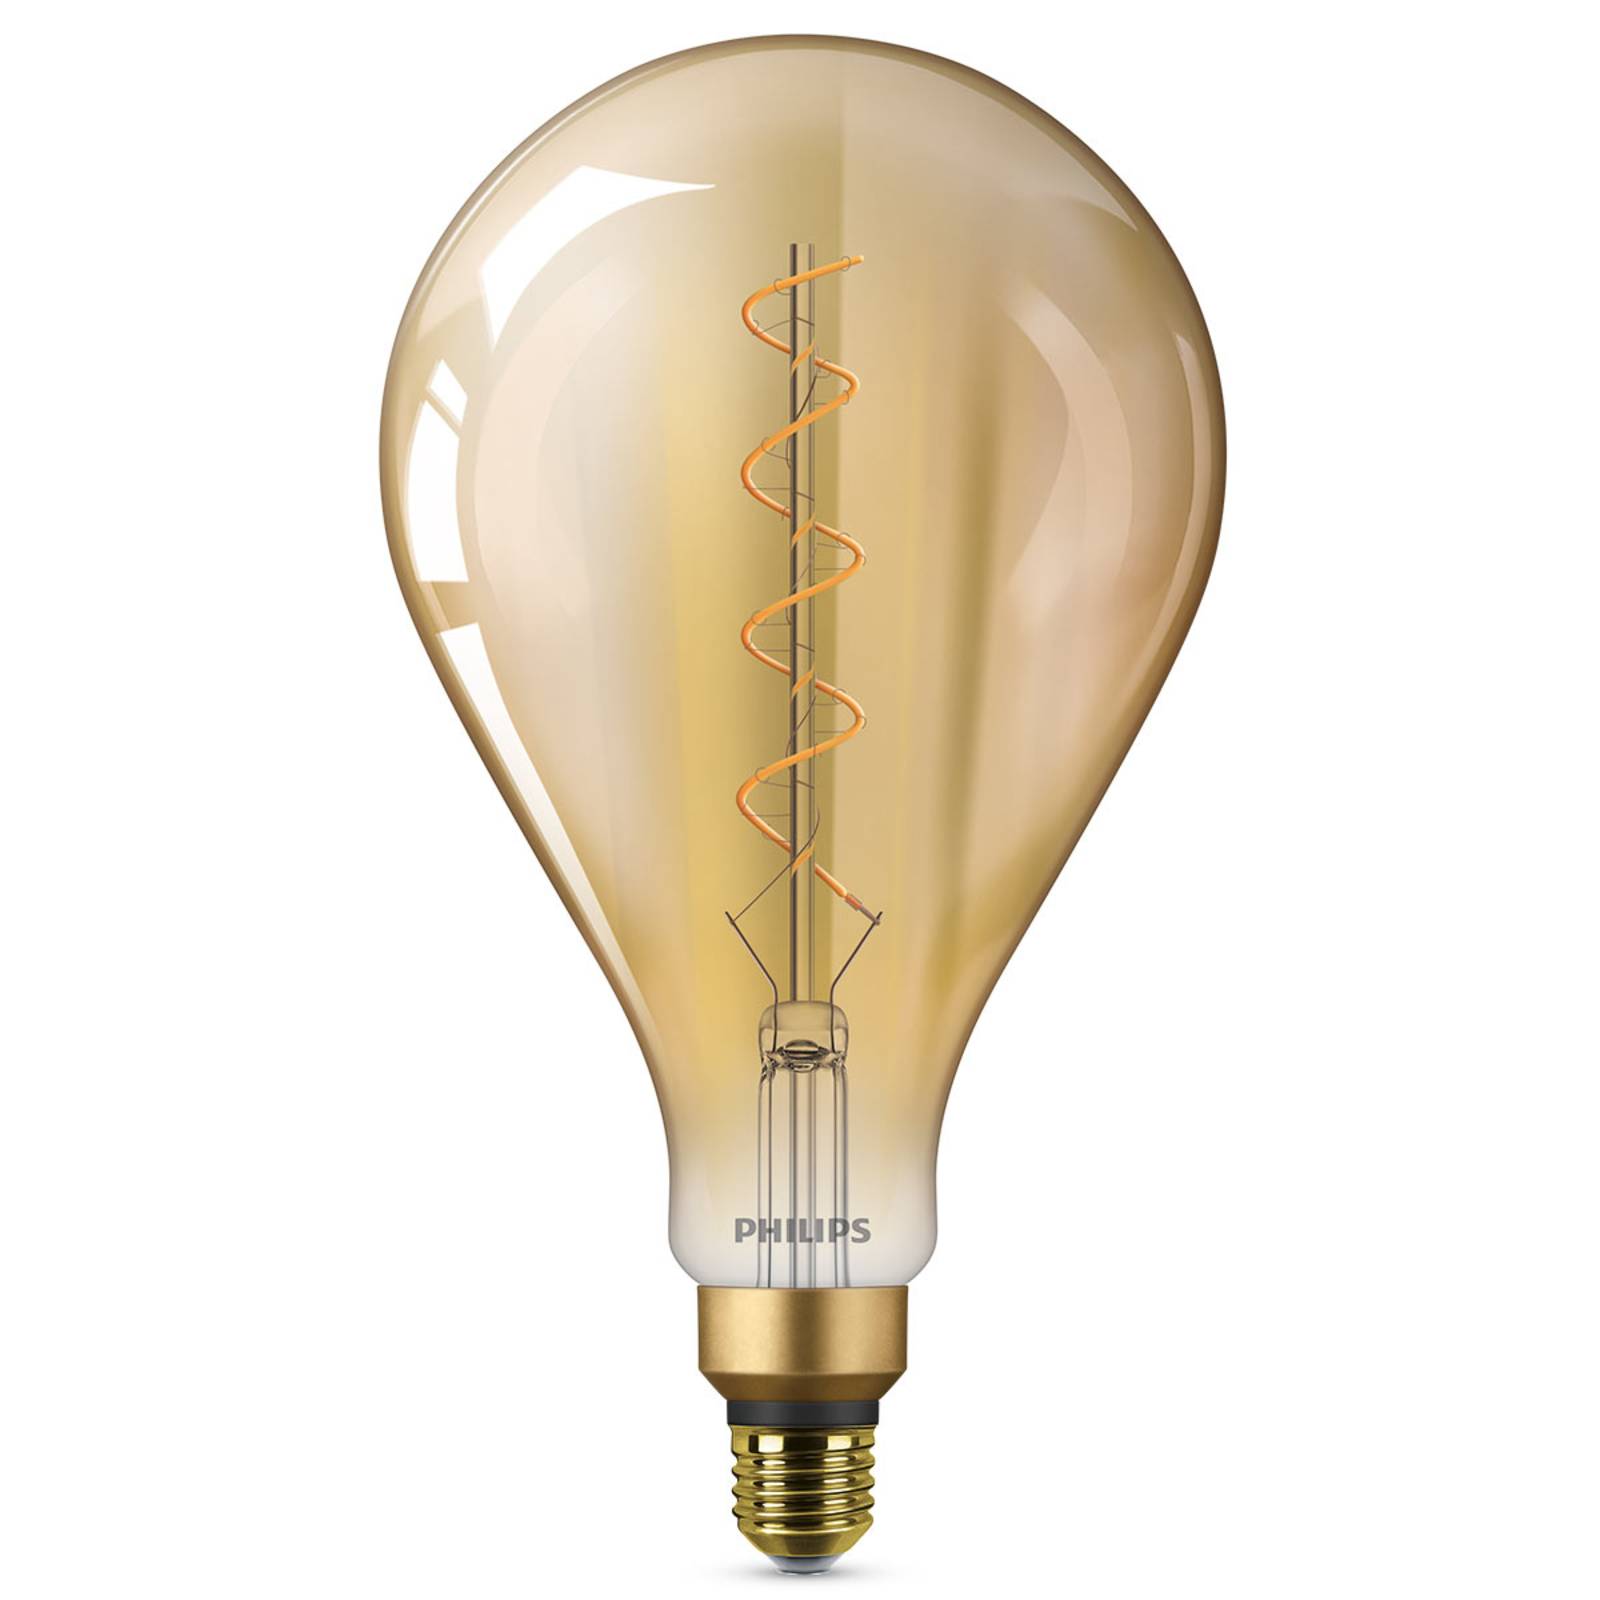 Philips E27 4,5W LED-Lampe Giant, warmweiß, gold